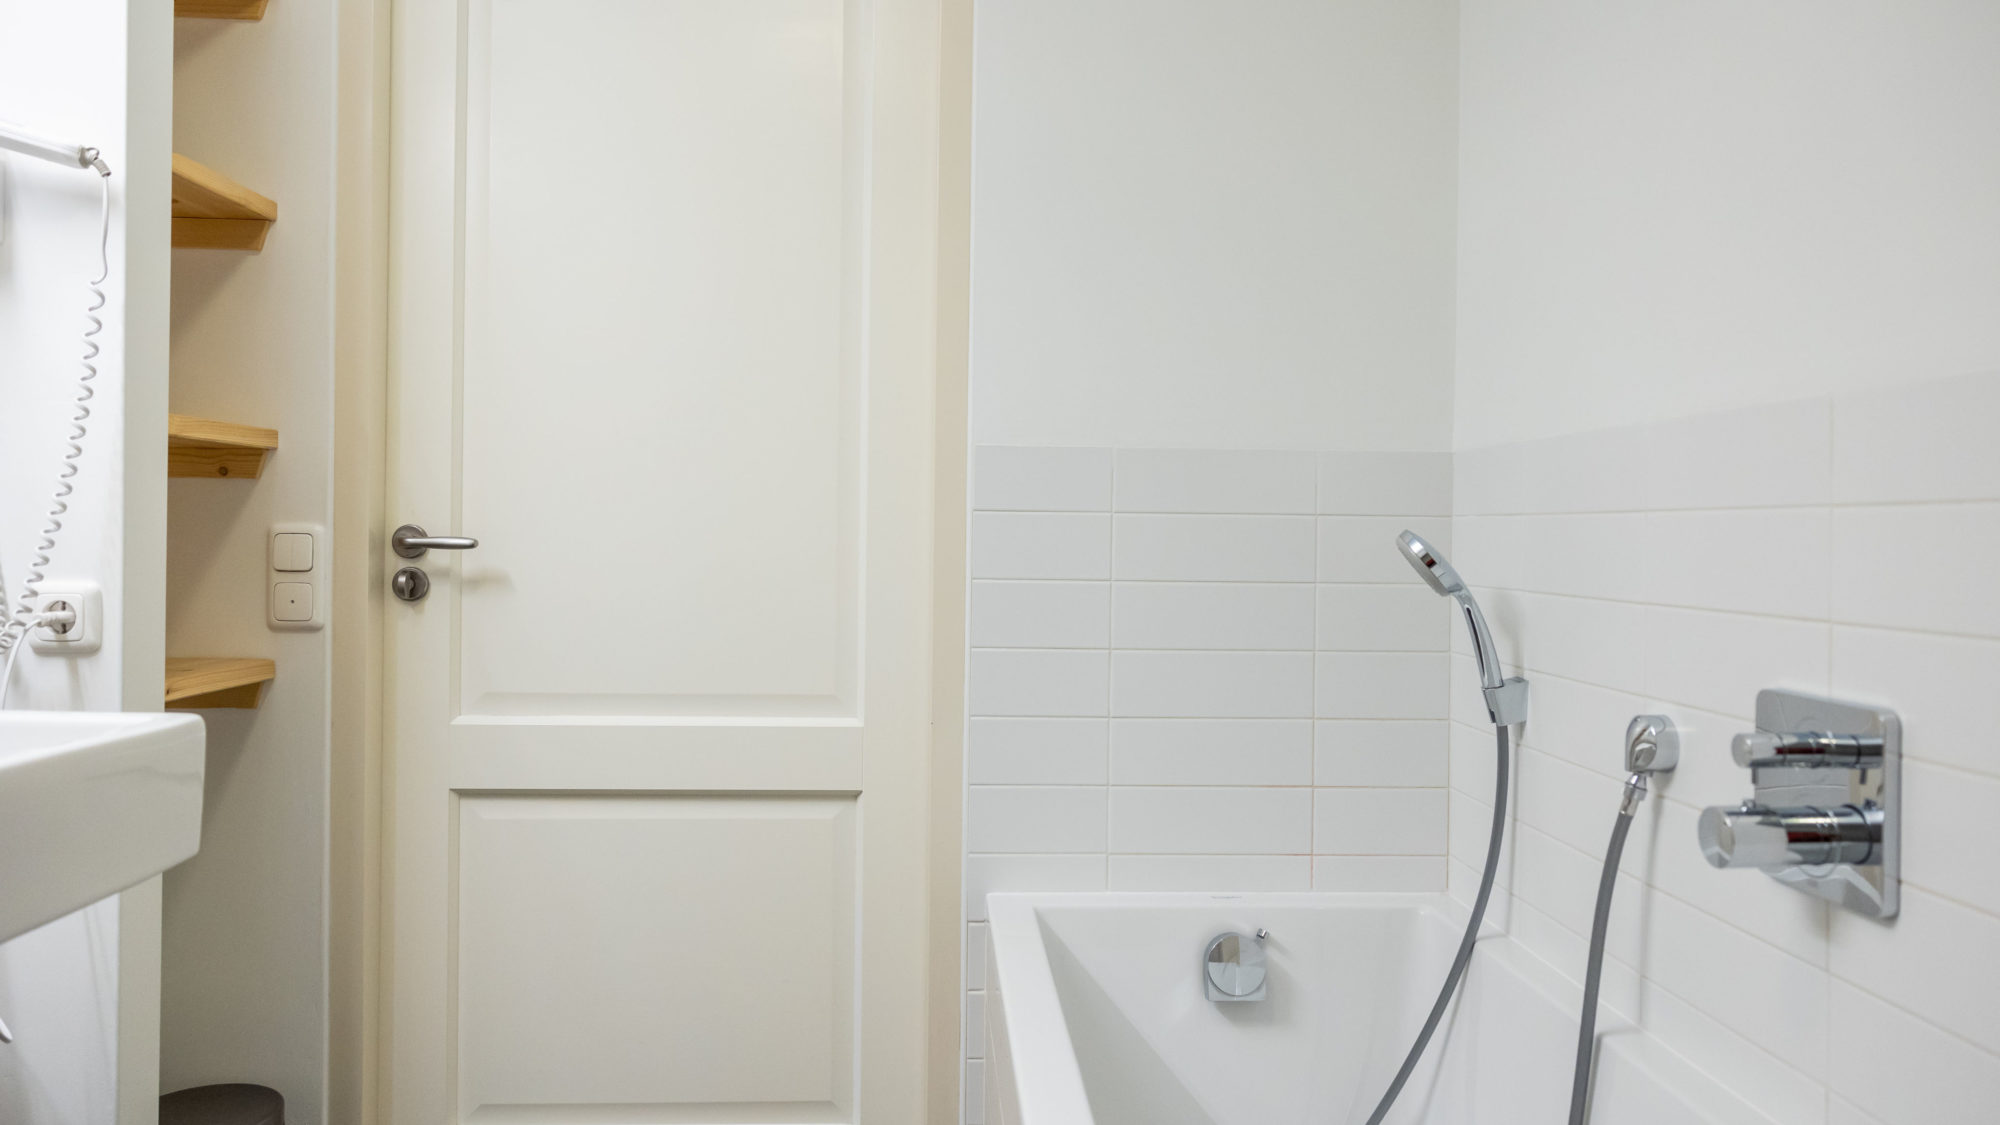 Ligbad handdouche badkamerdeur Hotel appartement bad douche Tjermelan Terschelling